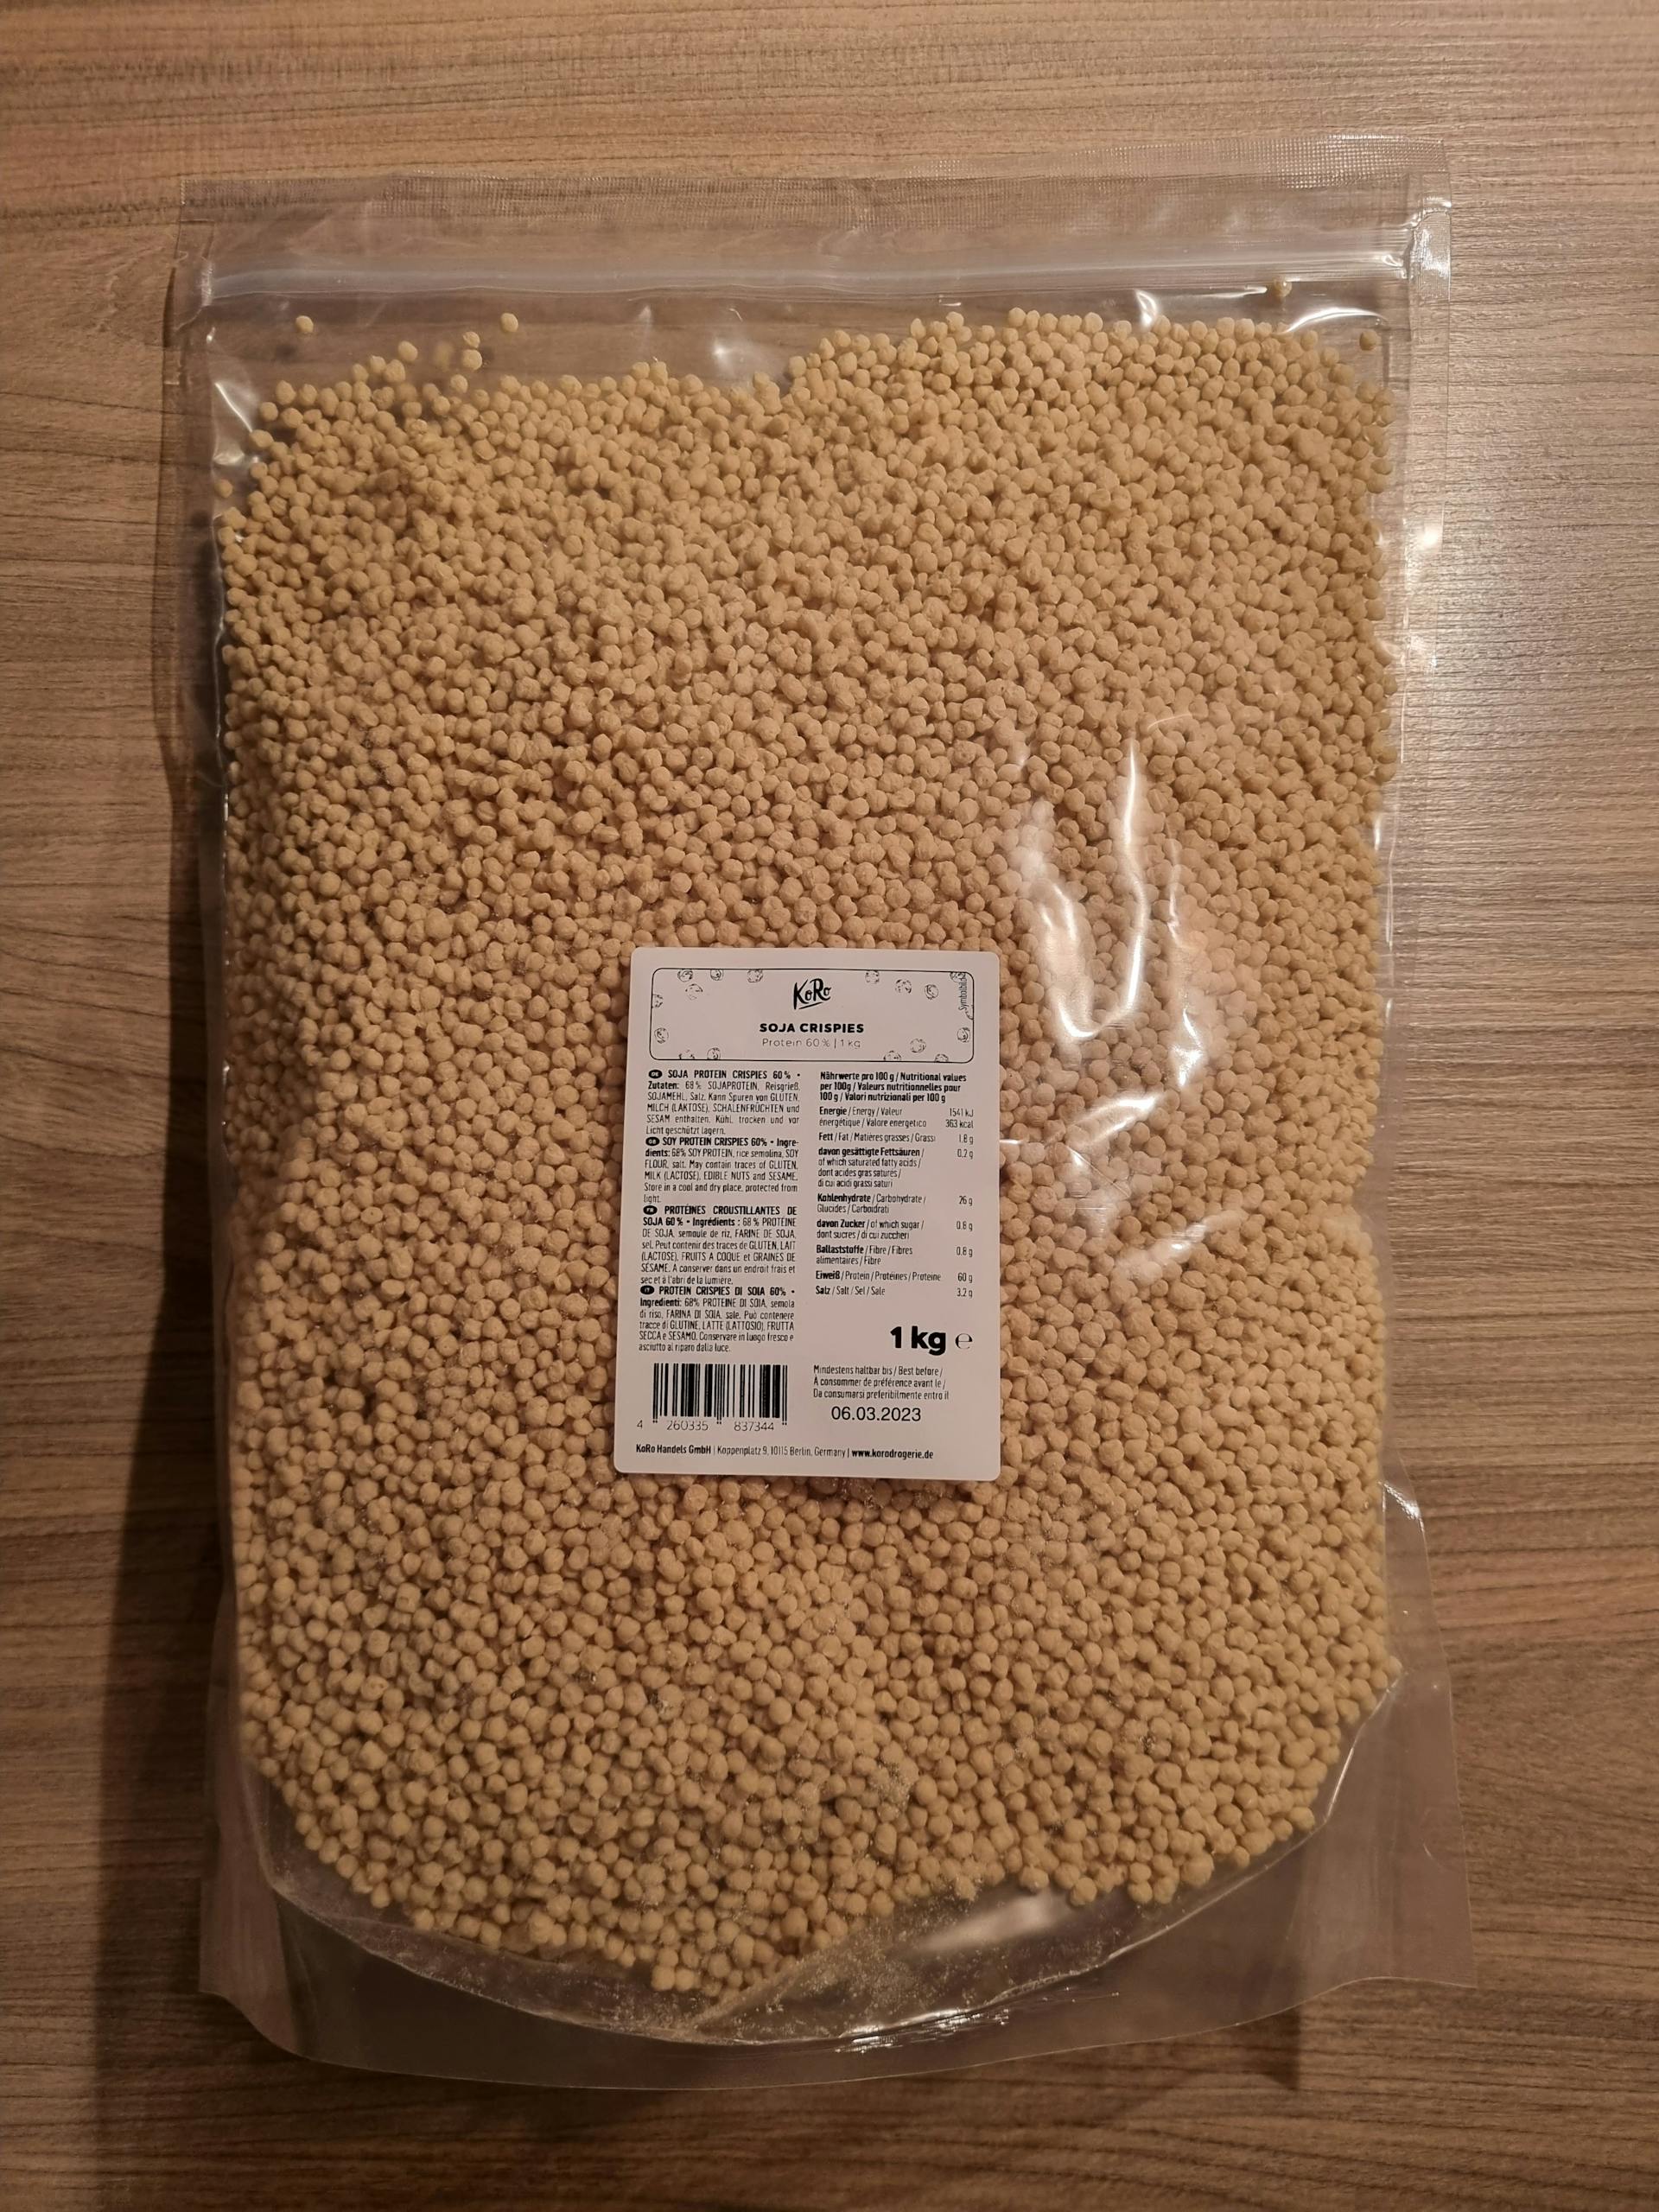 KoRo Soja Protein Crispies (500g)